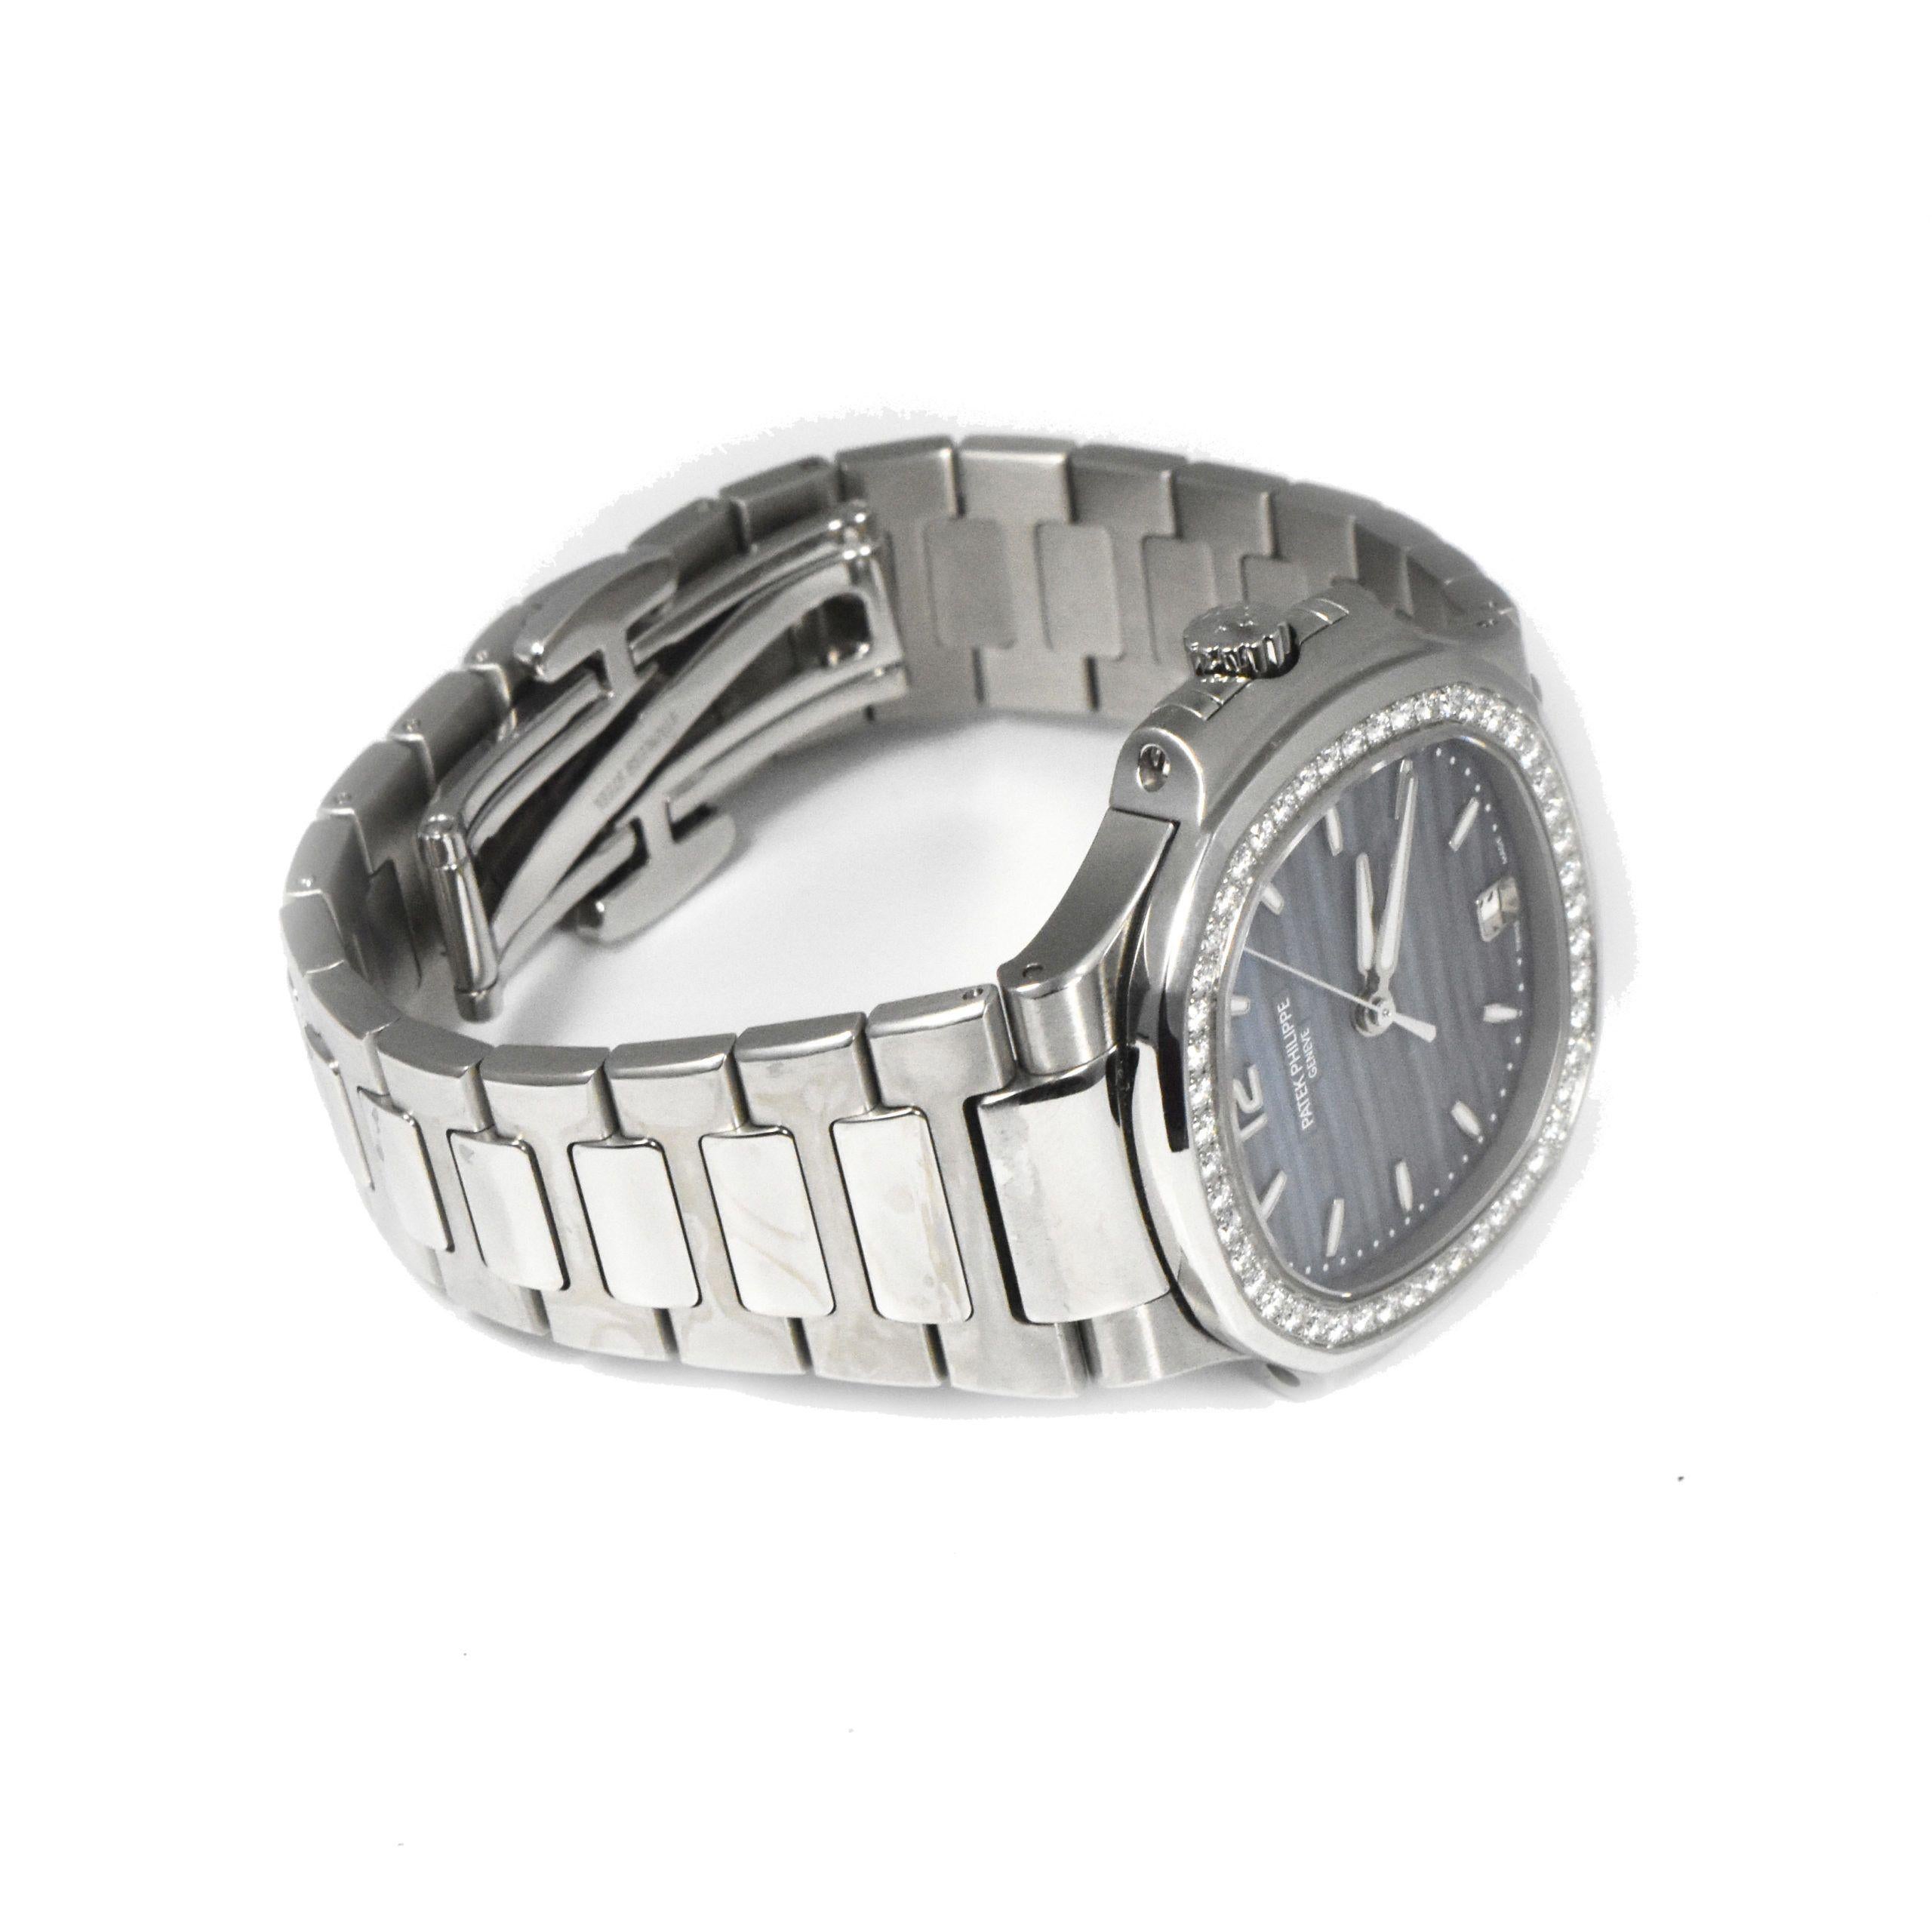 Patek Philippe Nautilus 7118 Blue Dial Diamond Bezel Steel Watch In Excellent Condition For Sale In Miami, FL